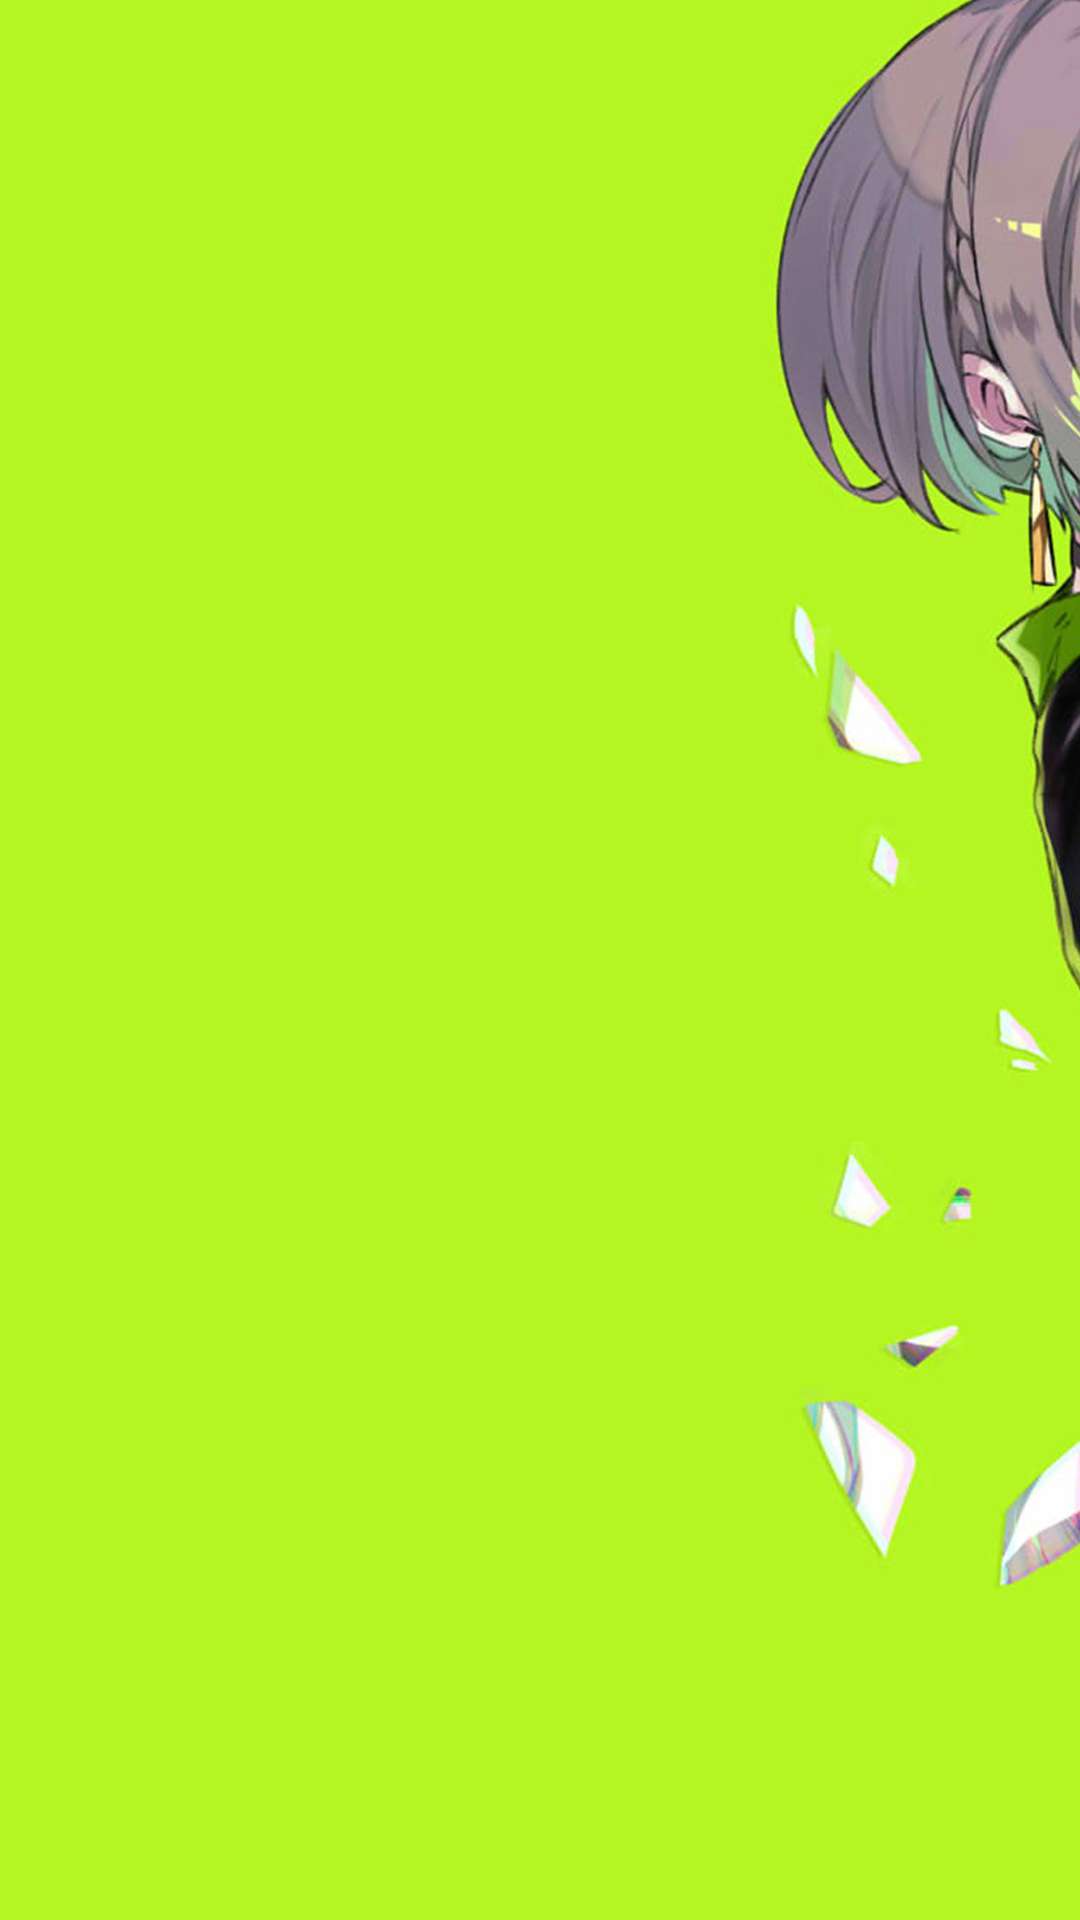 GREEN SCREEN EFFECTS Anime Girl  Akatsuki class  Green Screen  Effects Anime Scary Girl and more